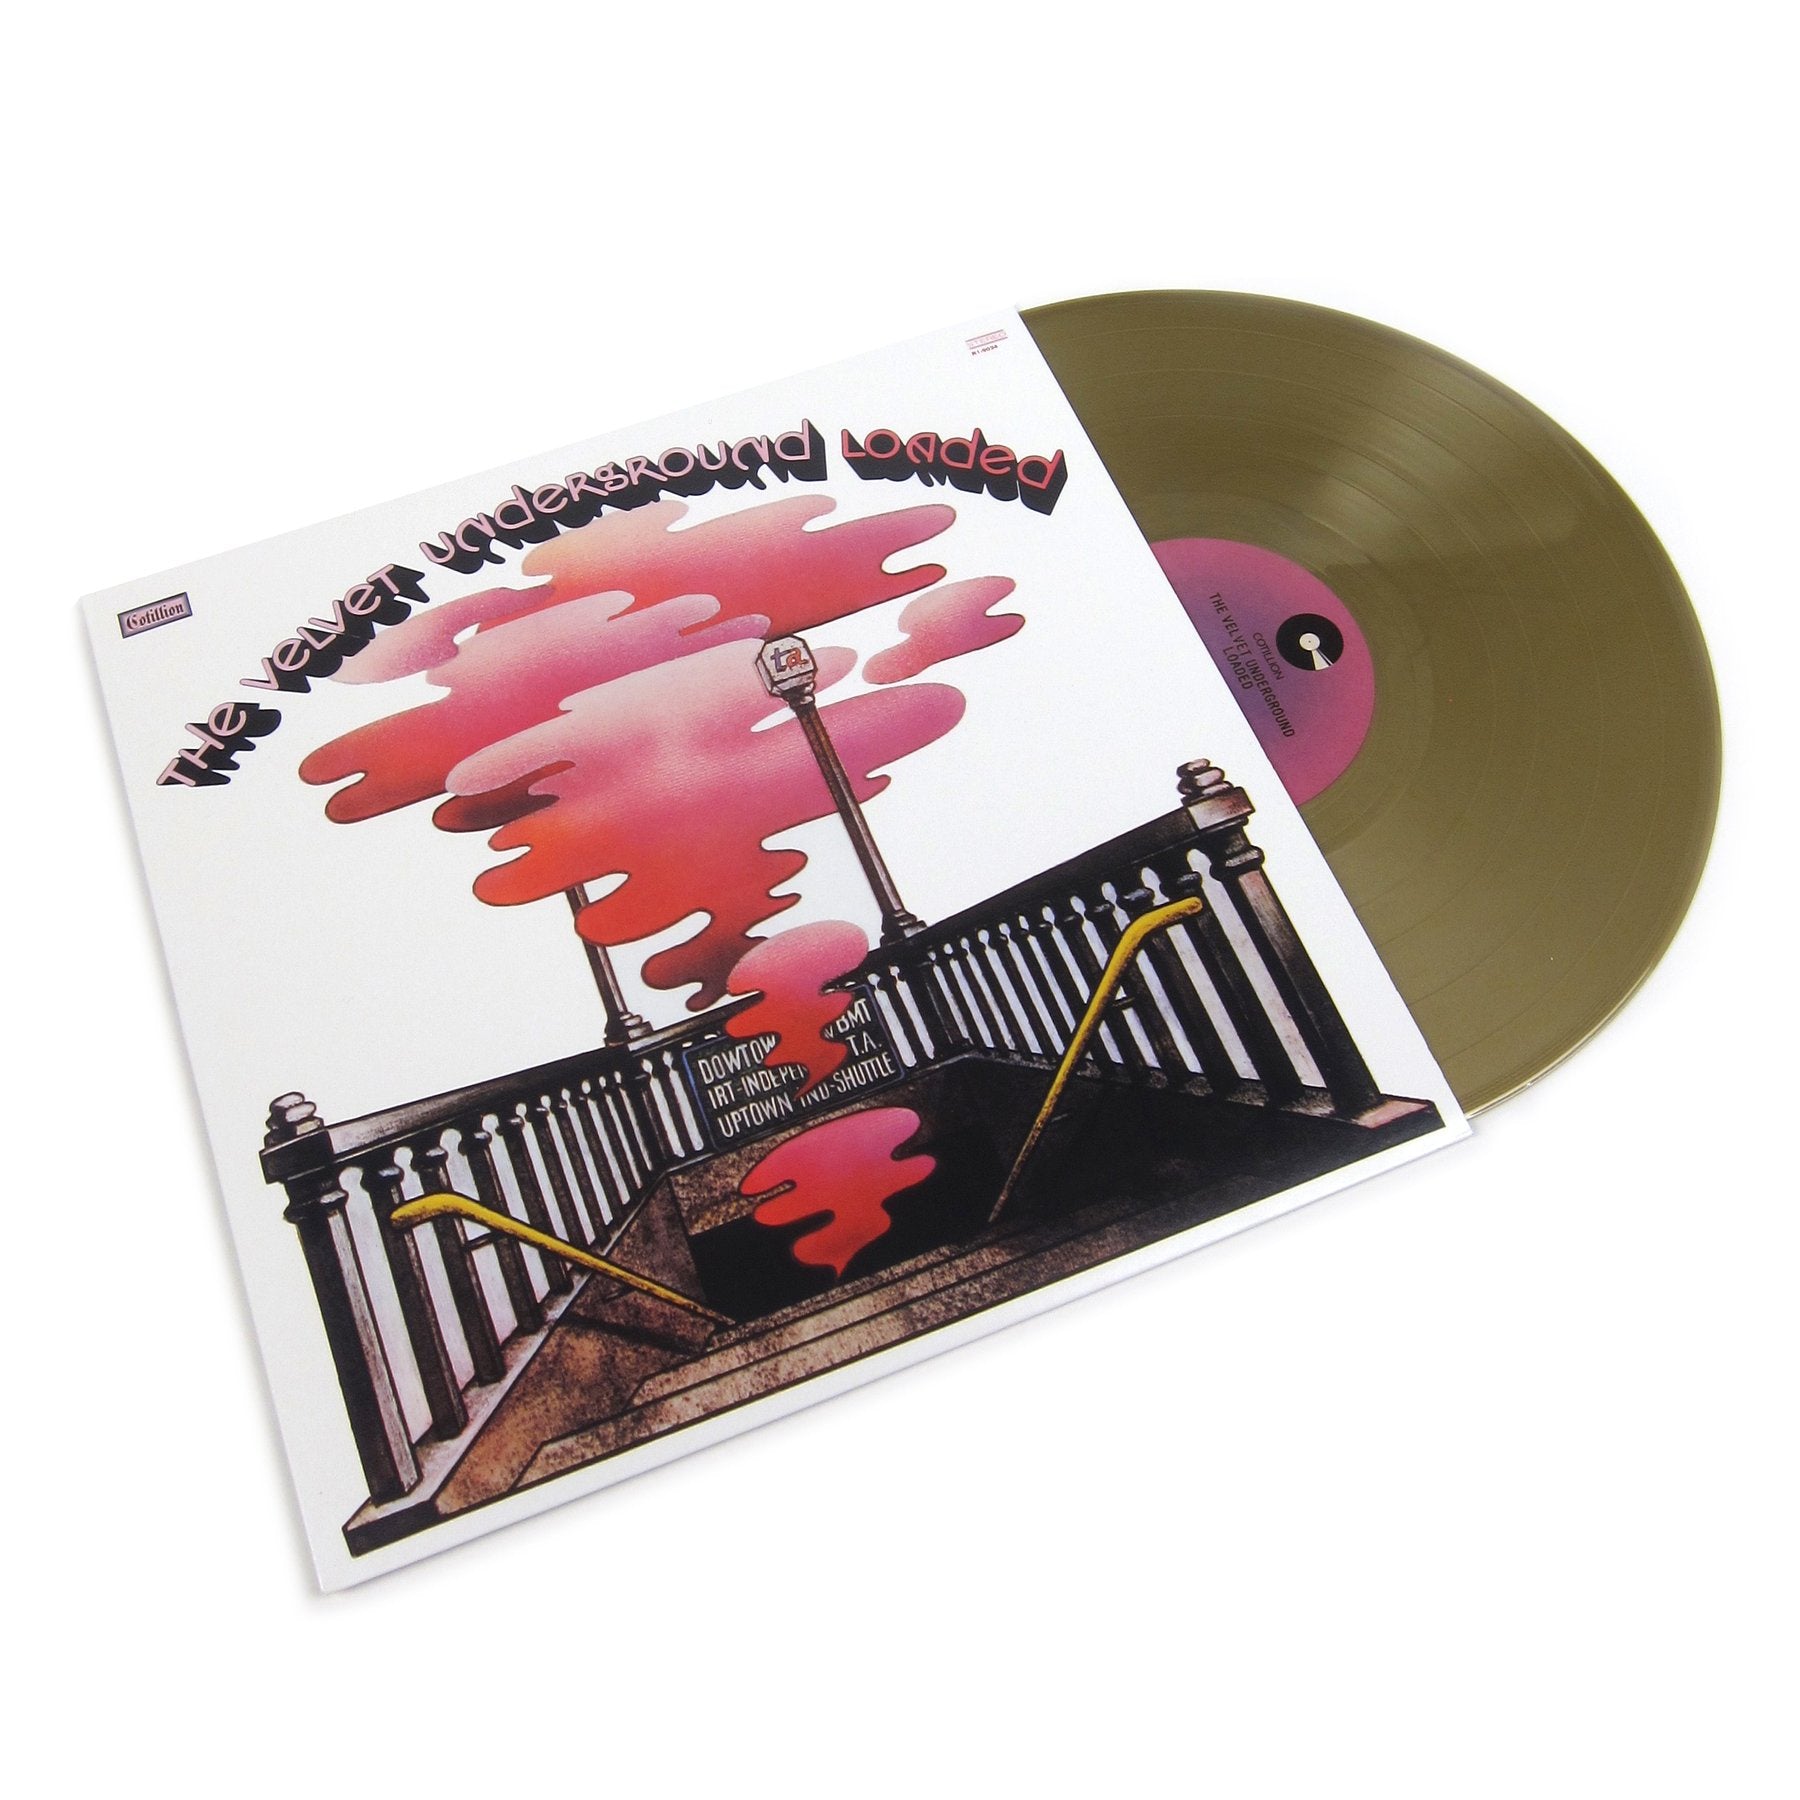 The Velvet Underground ‎– Loaded (1970) - New Lp Record 2017 Rocktober on Gold Vinyl - Psychedelic Rock / Art Rock